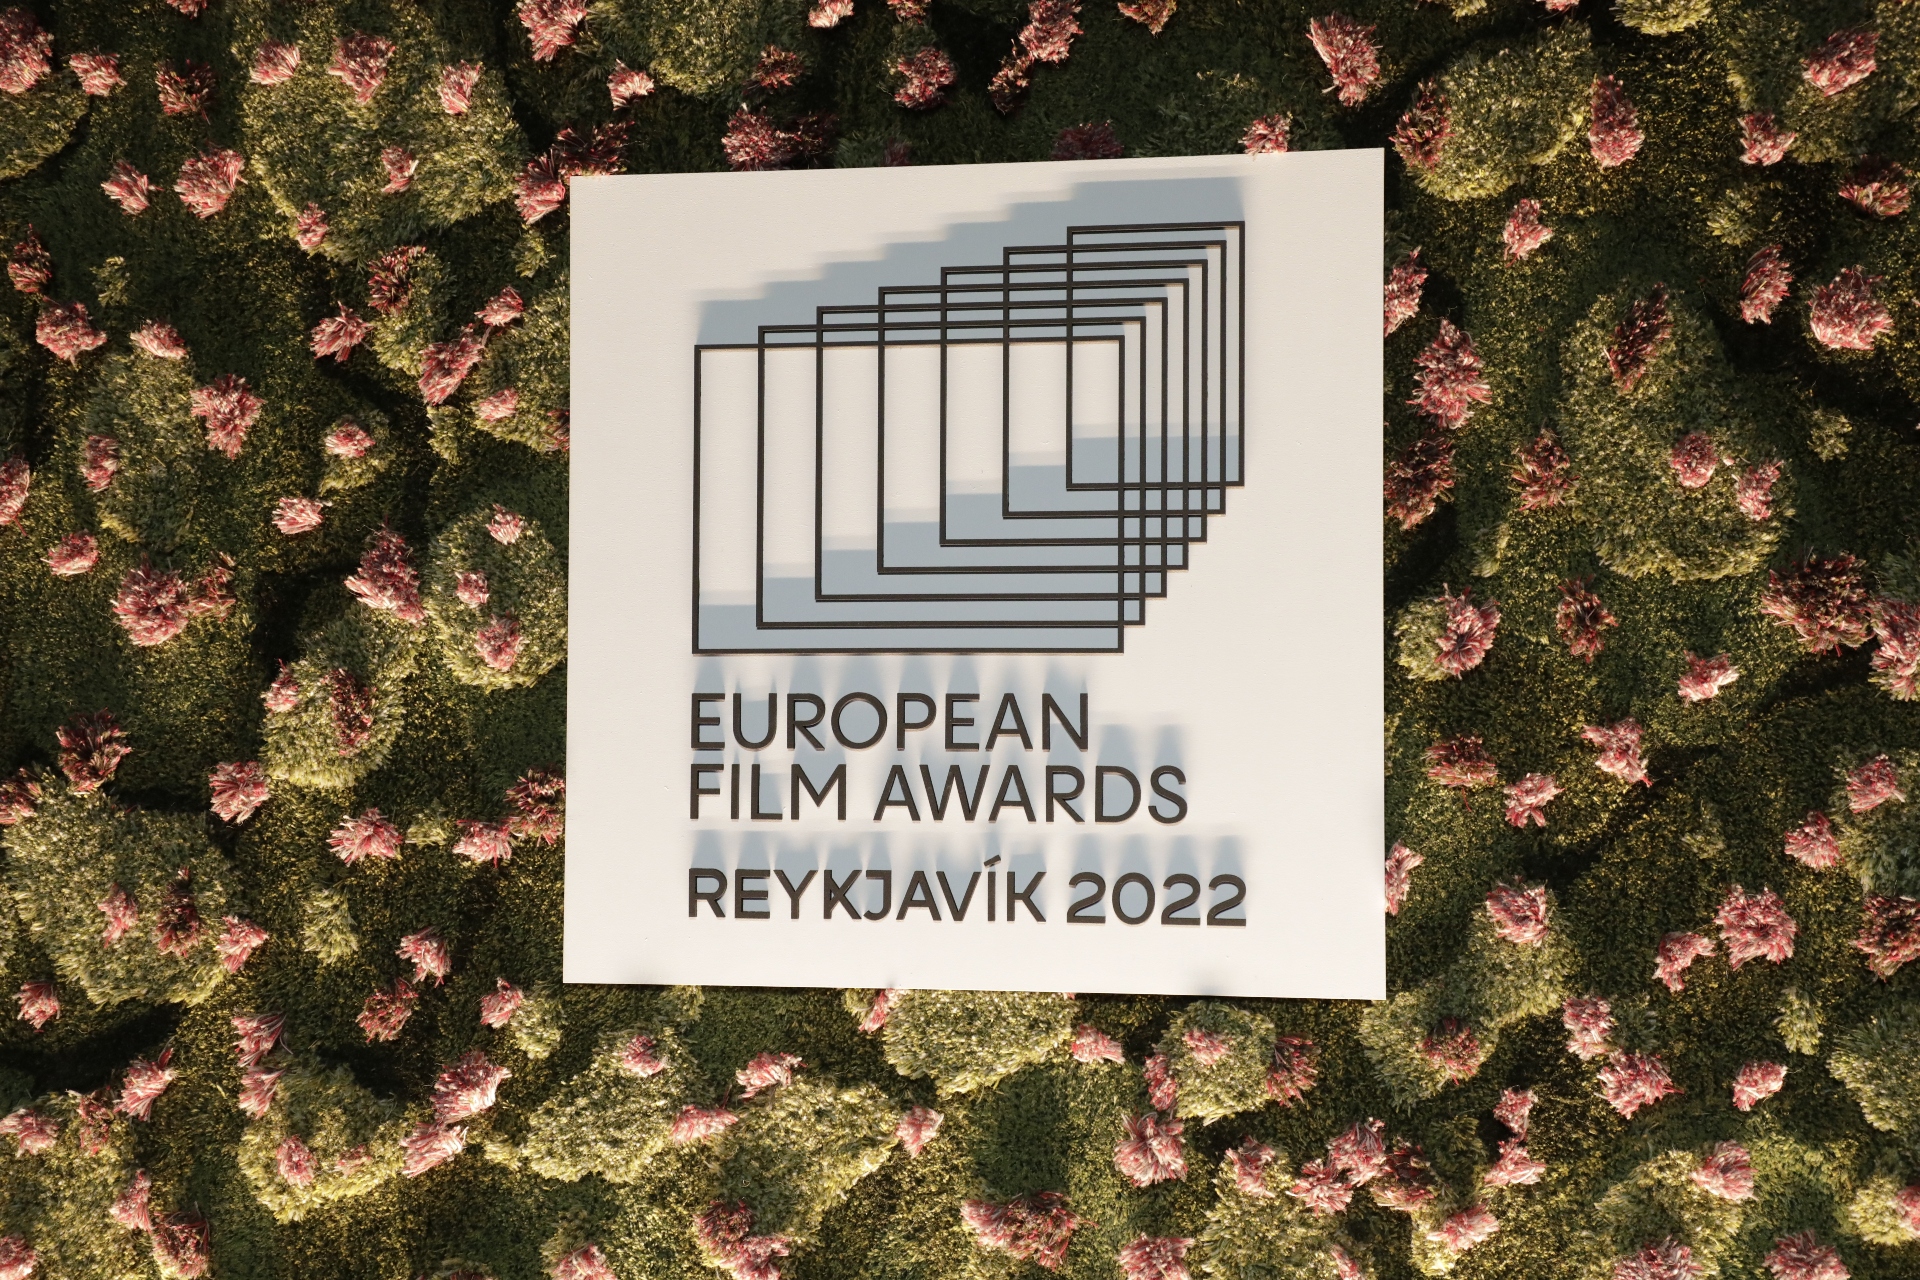 European Film Awards wall (Photo by Sebastian Gabsch)